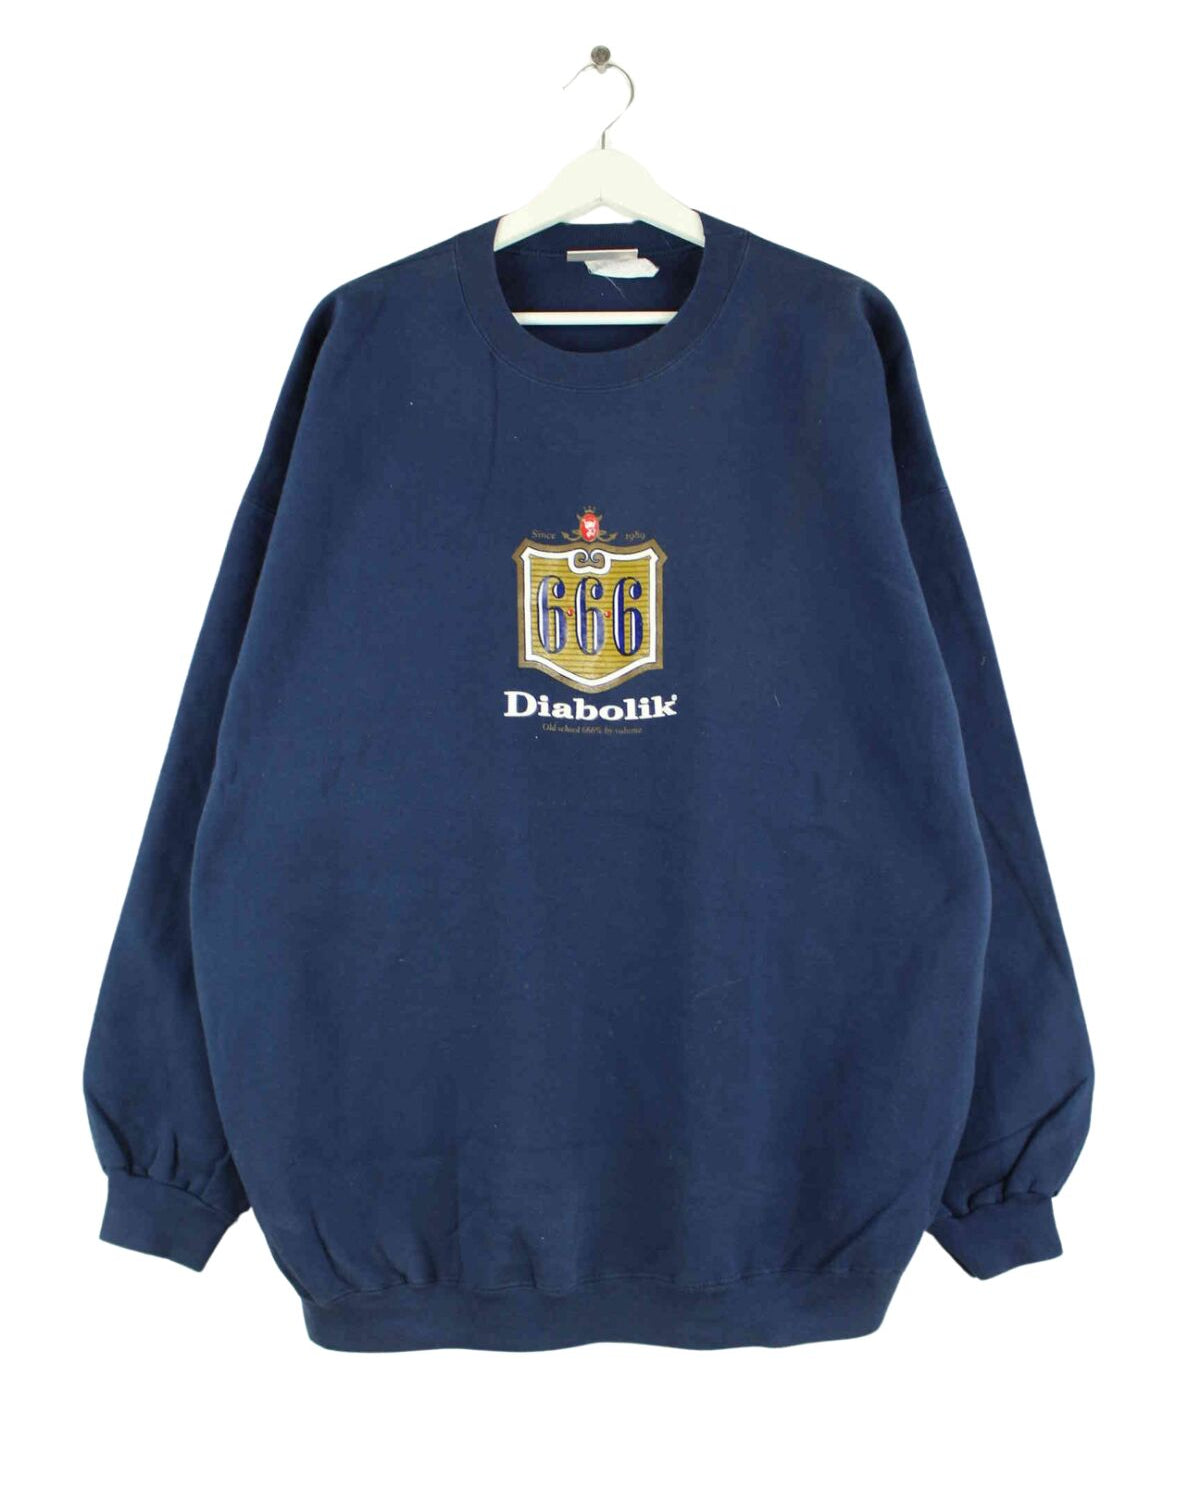 Hanes 90s Vintage Diabolik Print Heavy Sweater Blau XXL (front image)